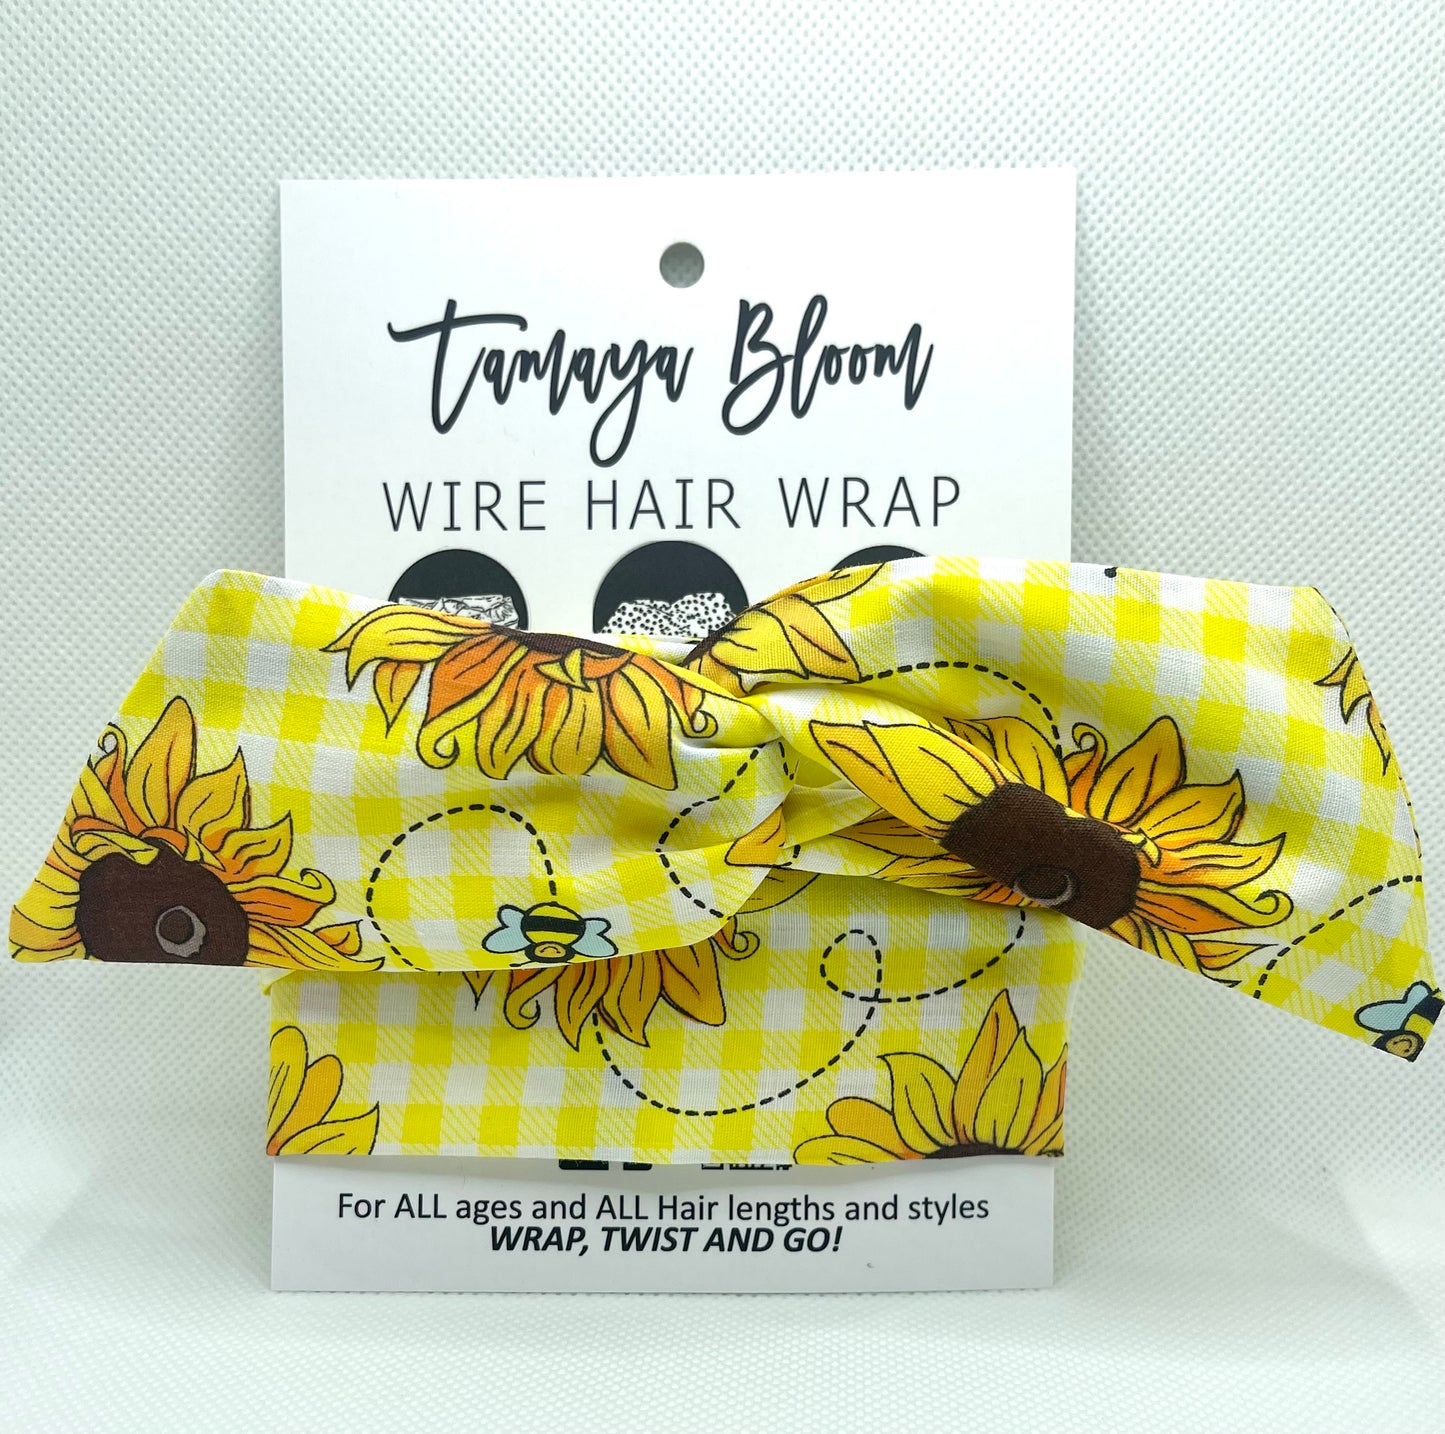 Wire Hair Wrap Sunflower Gingham